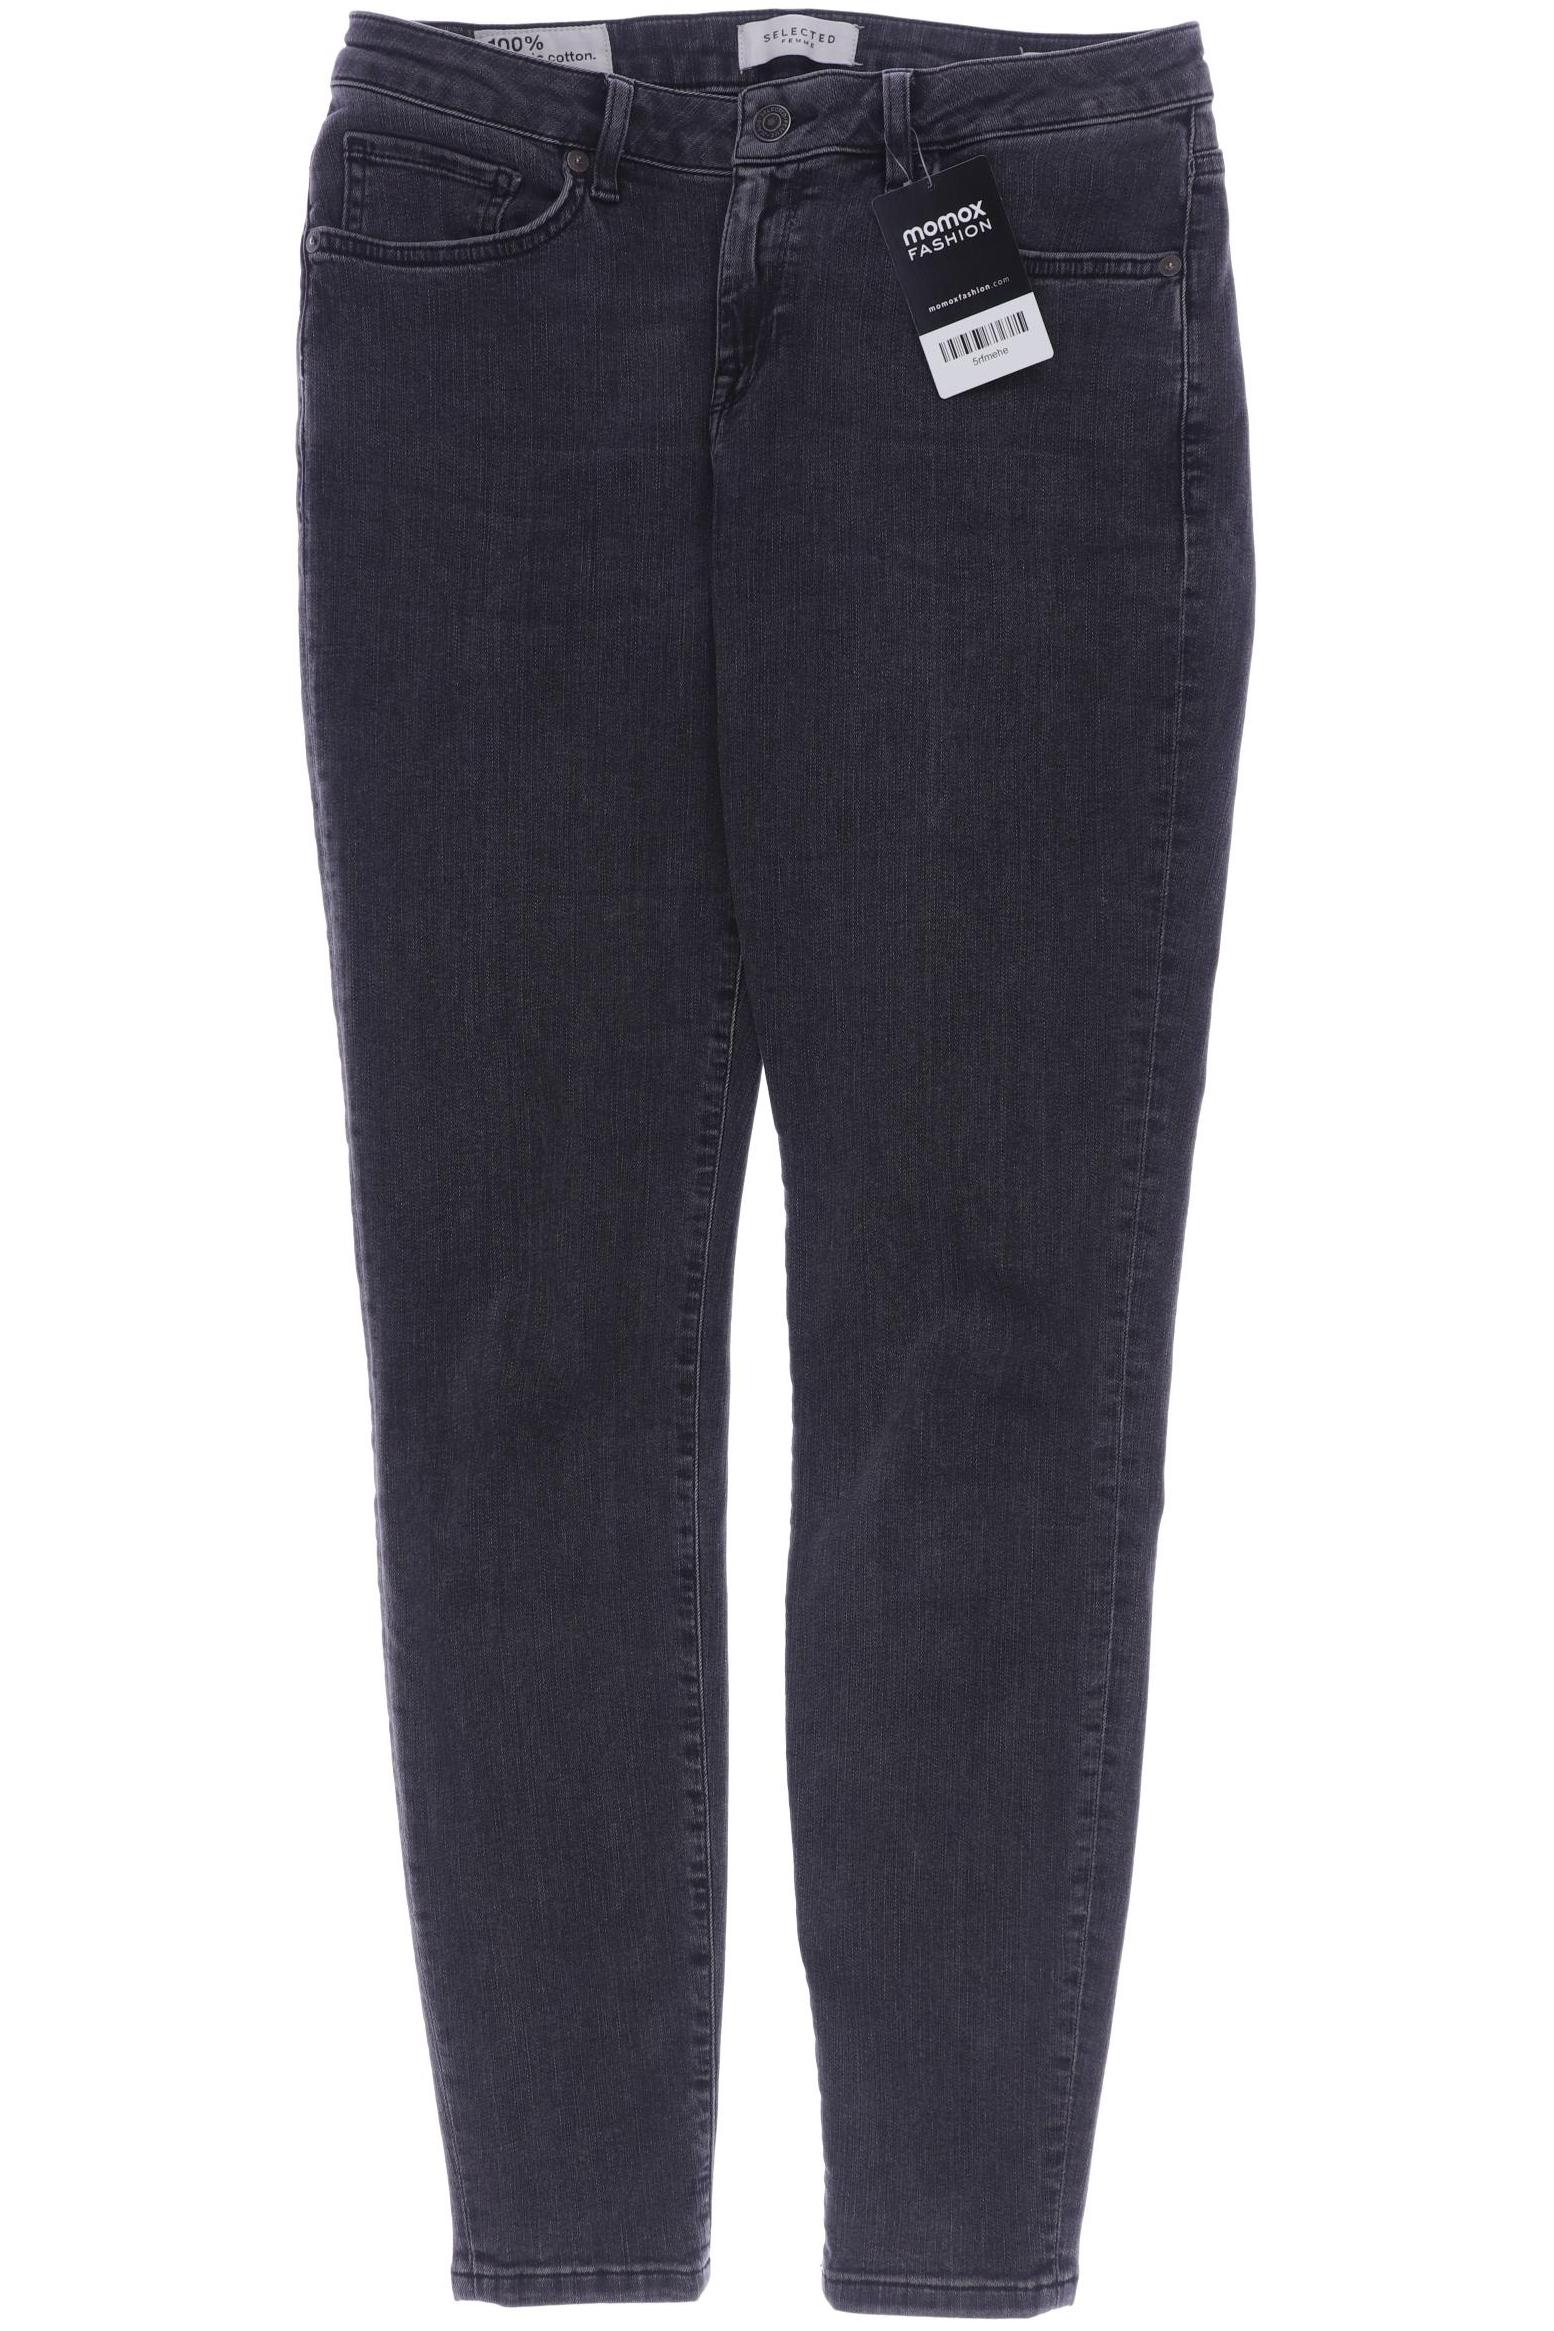 Selected Damen Jeans, grau, Gr. 40 von Selected